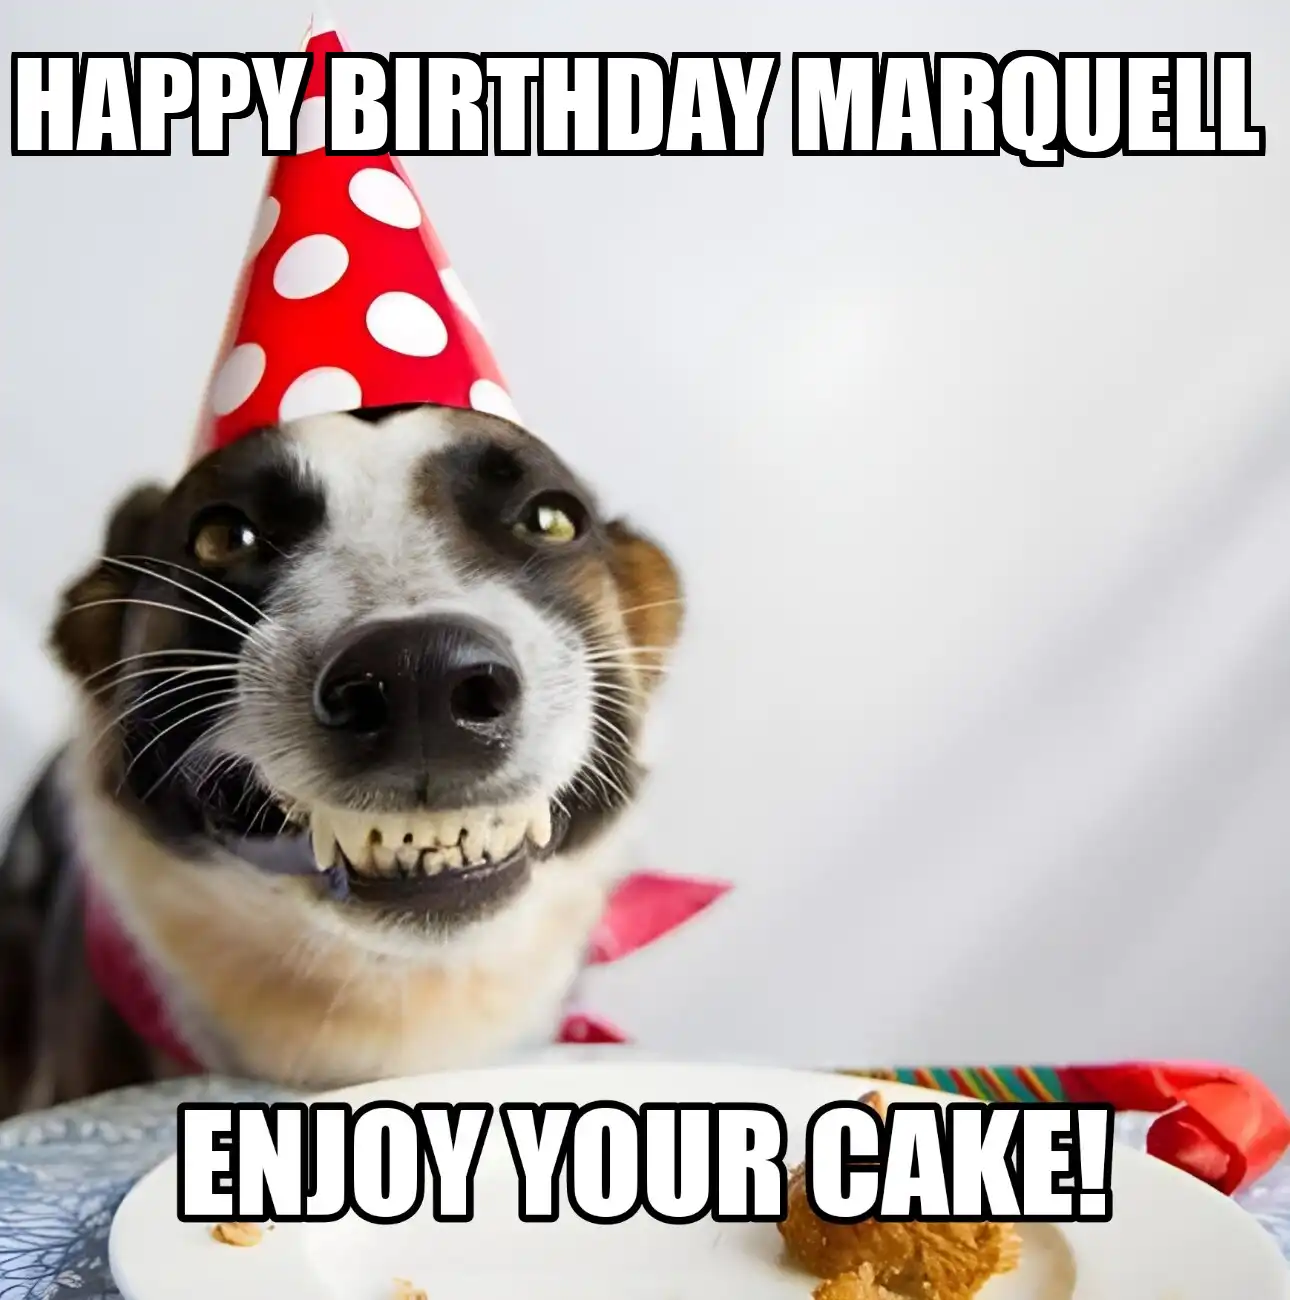 Happy Birthday Marquell Enjoy Your Cake Dog Meme